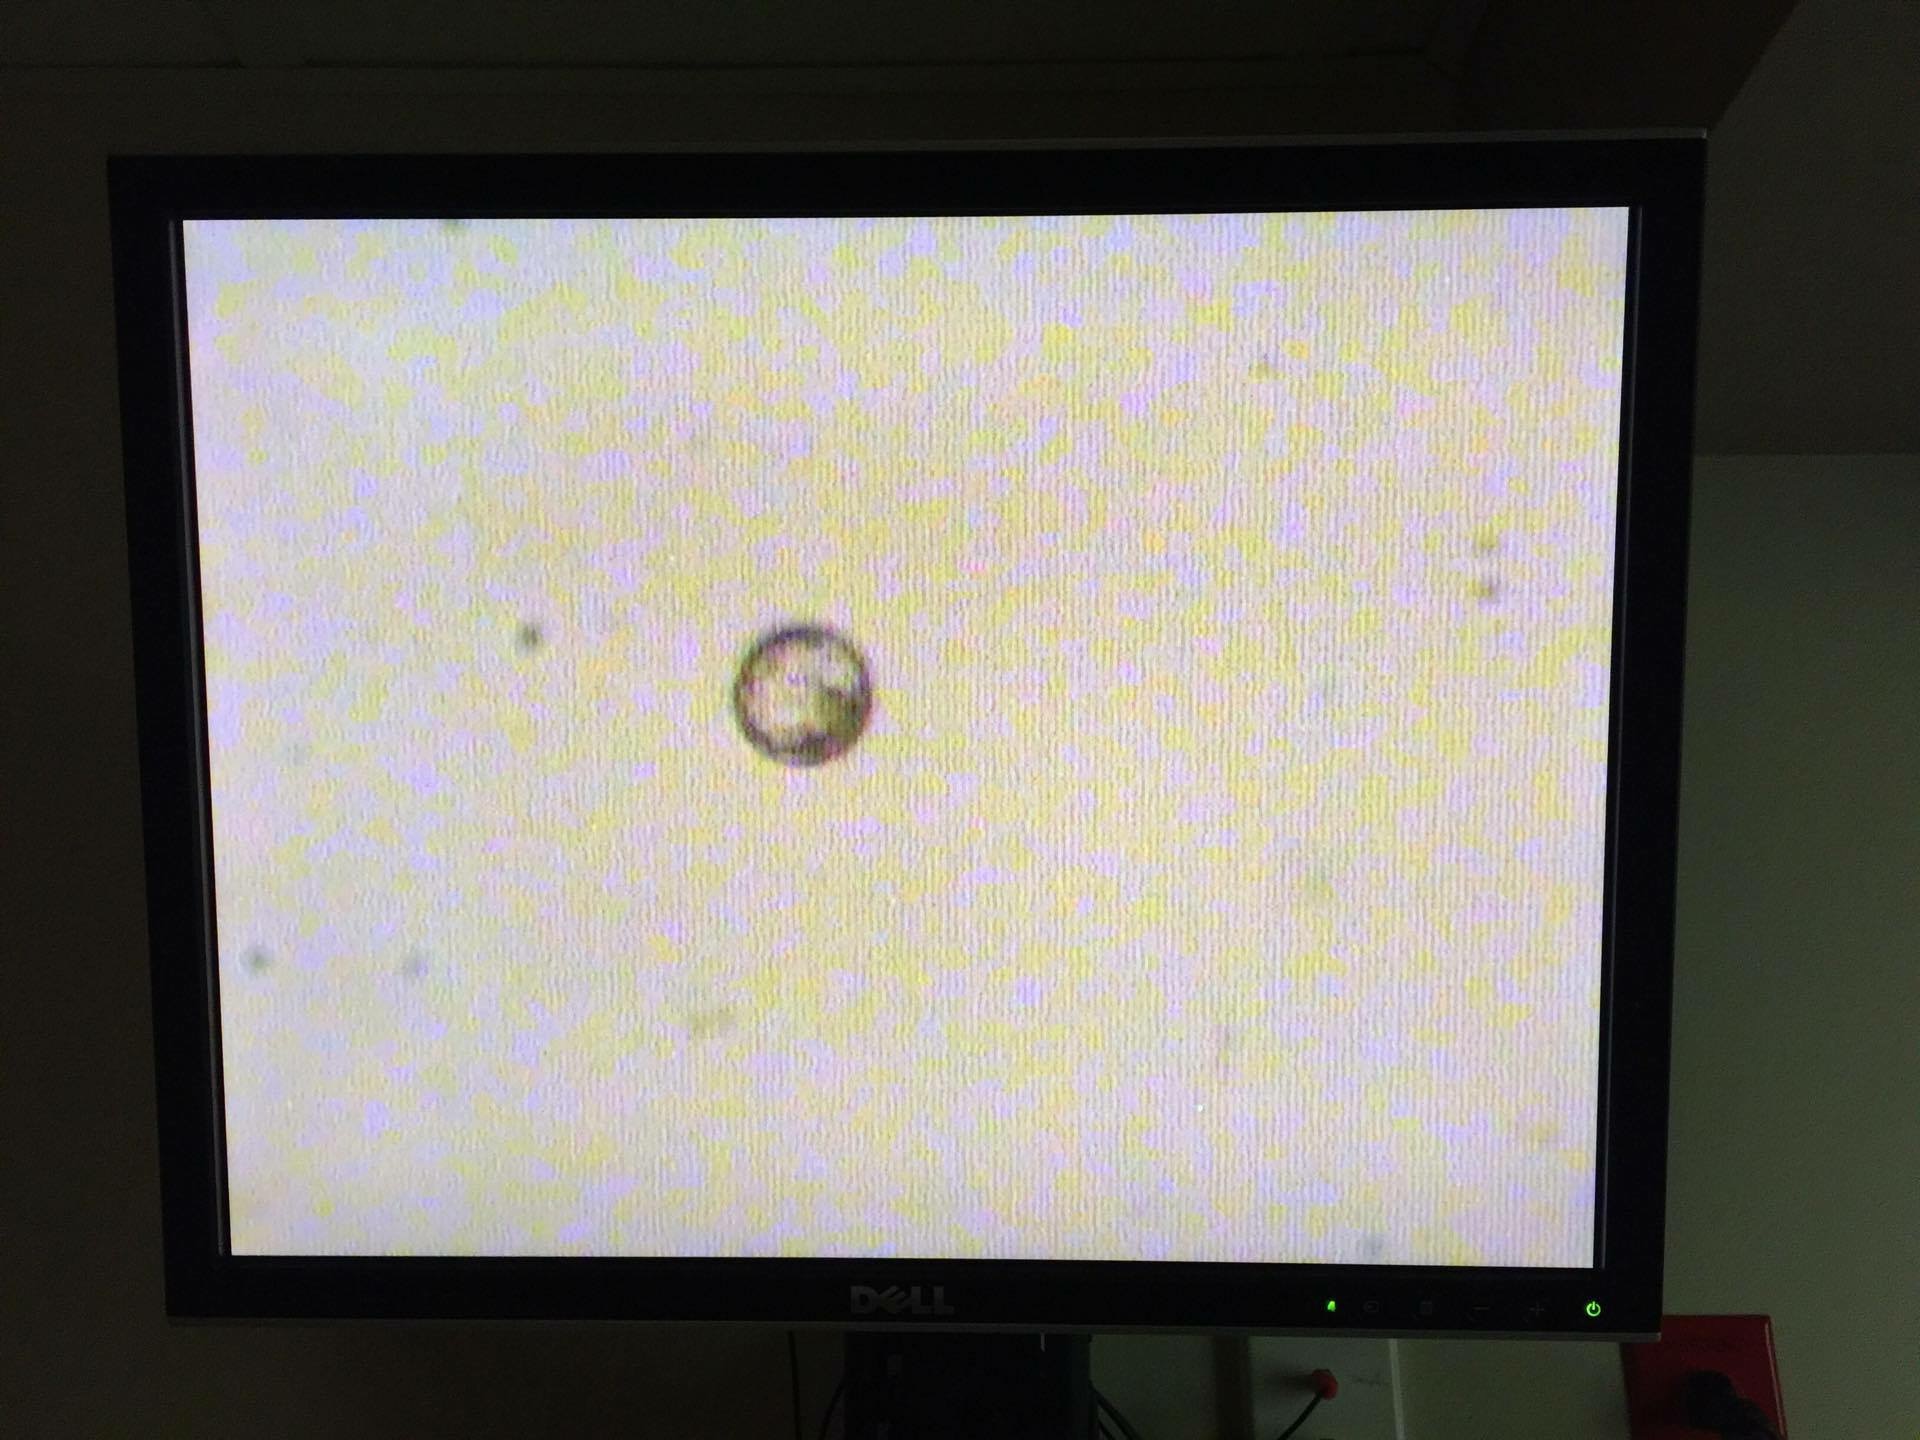 Embryo on the screen